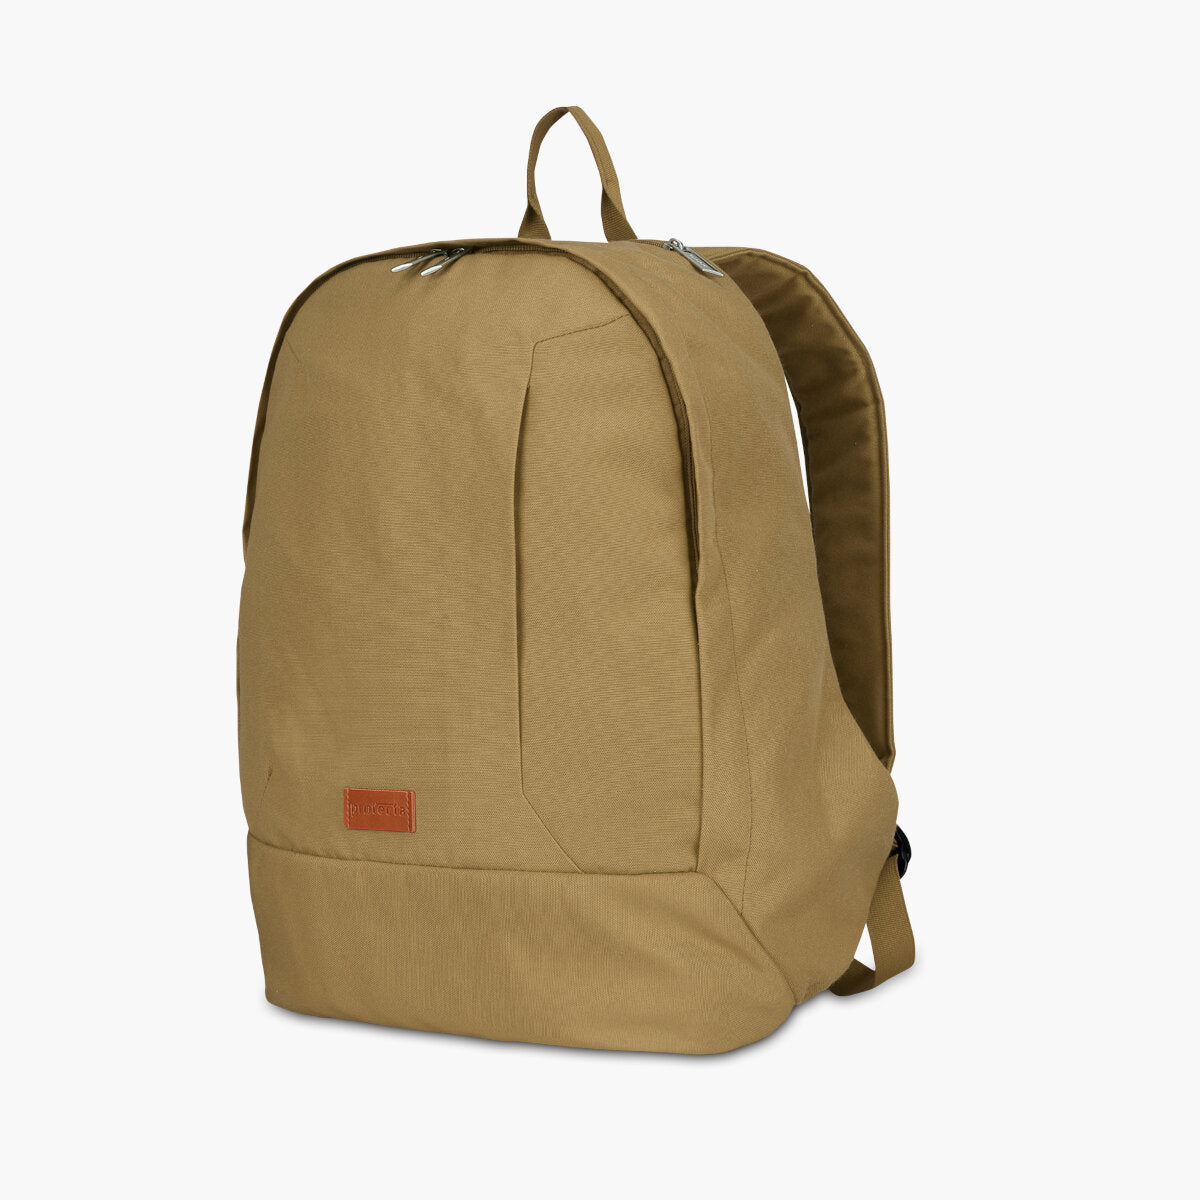 Beige | Protecta Steady Progress Laptop Backpack - 5